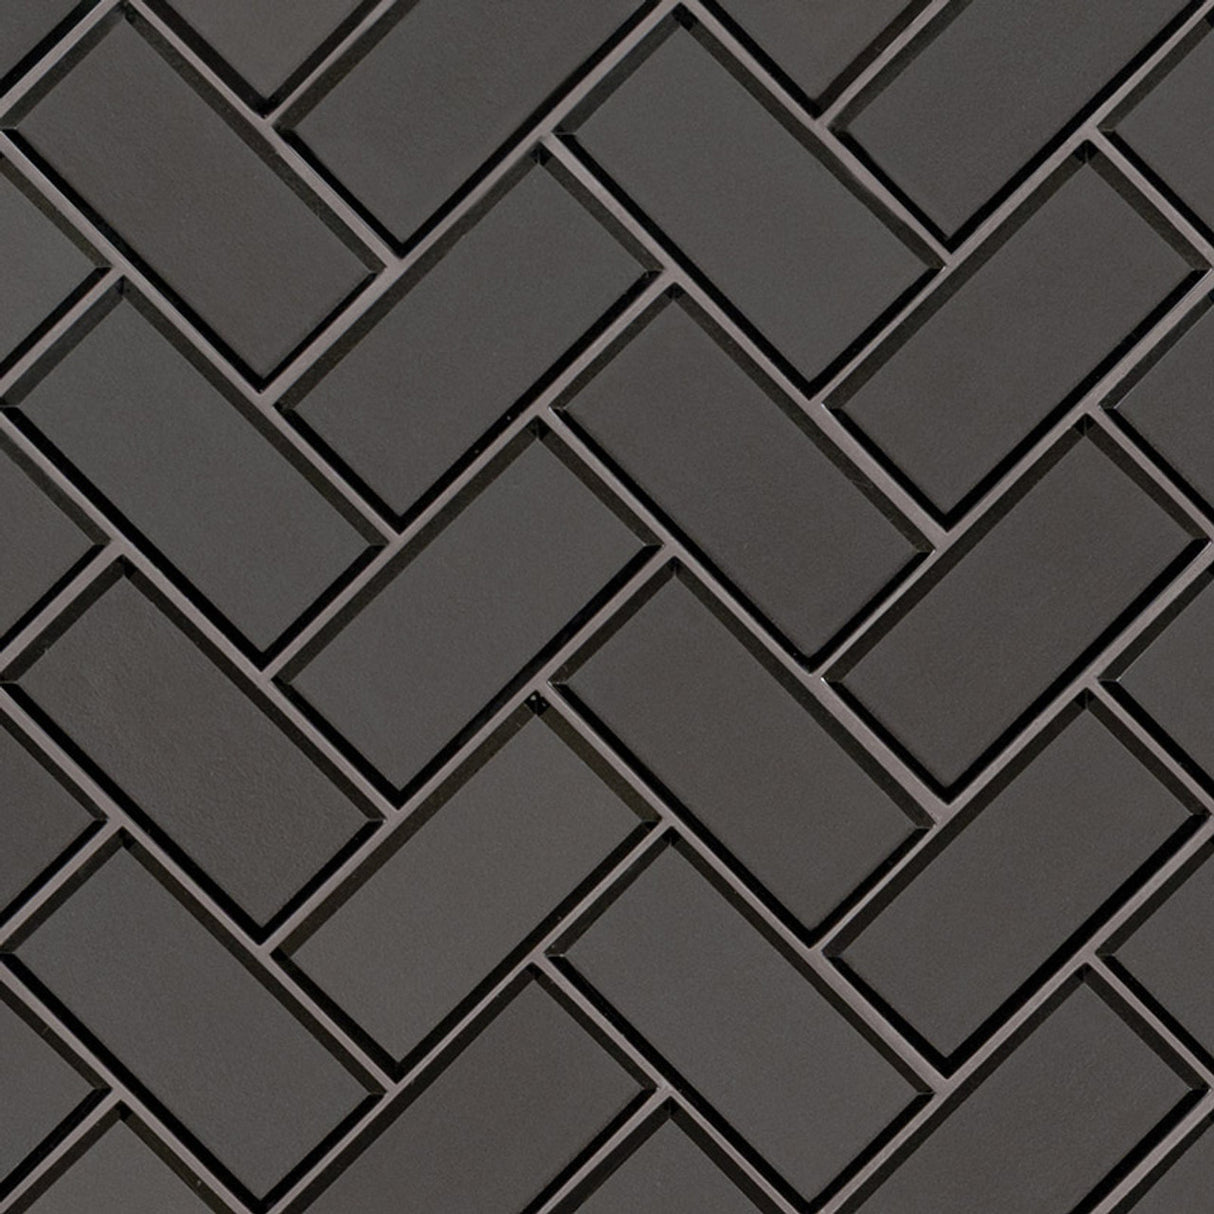 Metallic gray bevel herringbone 11.08X13.86 glass mesh mounted mosaic tile SMOT-GLS-MEGRBEHB8MM product shot multiple tiles top view